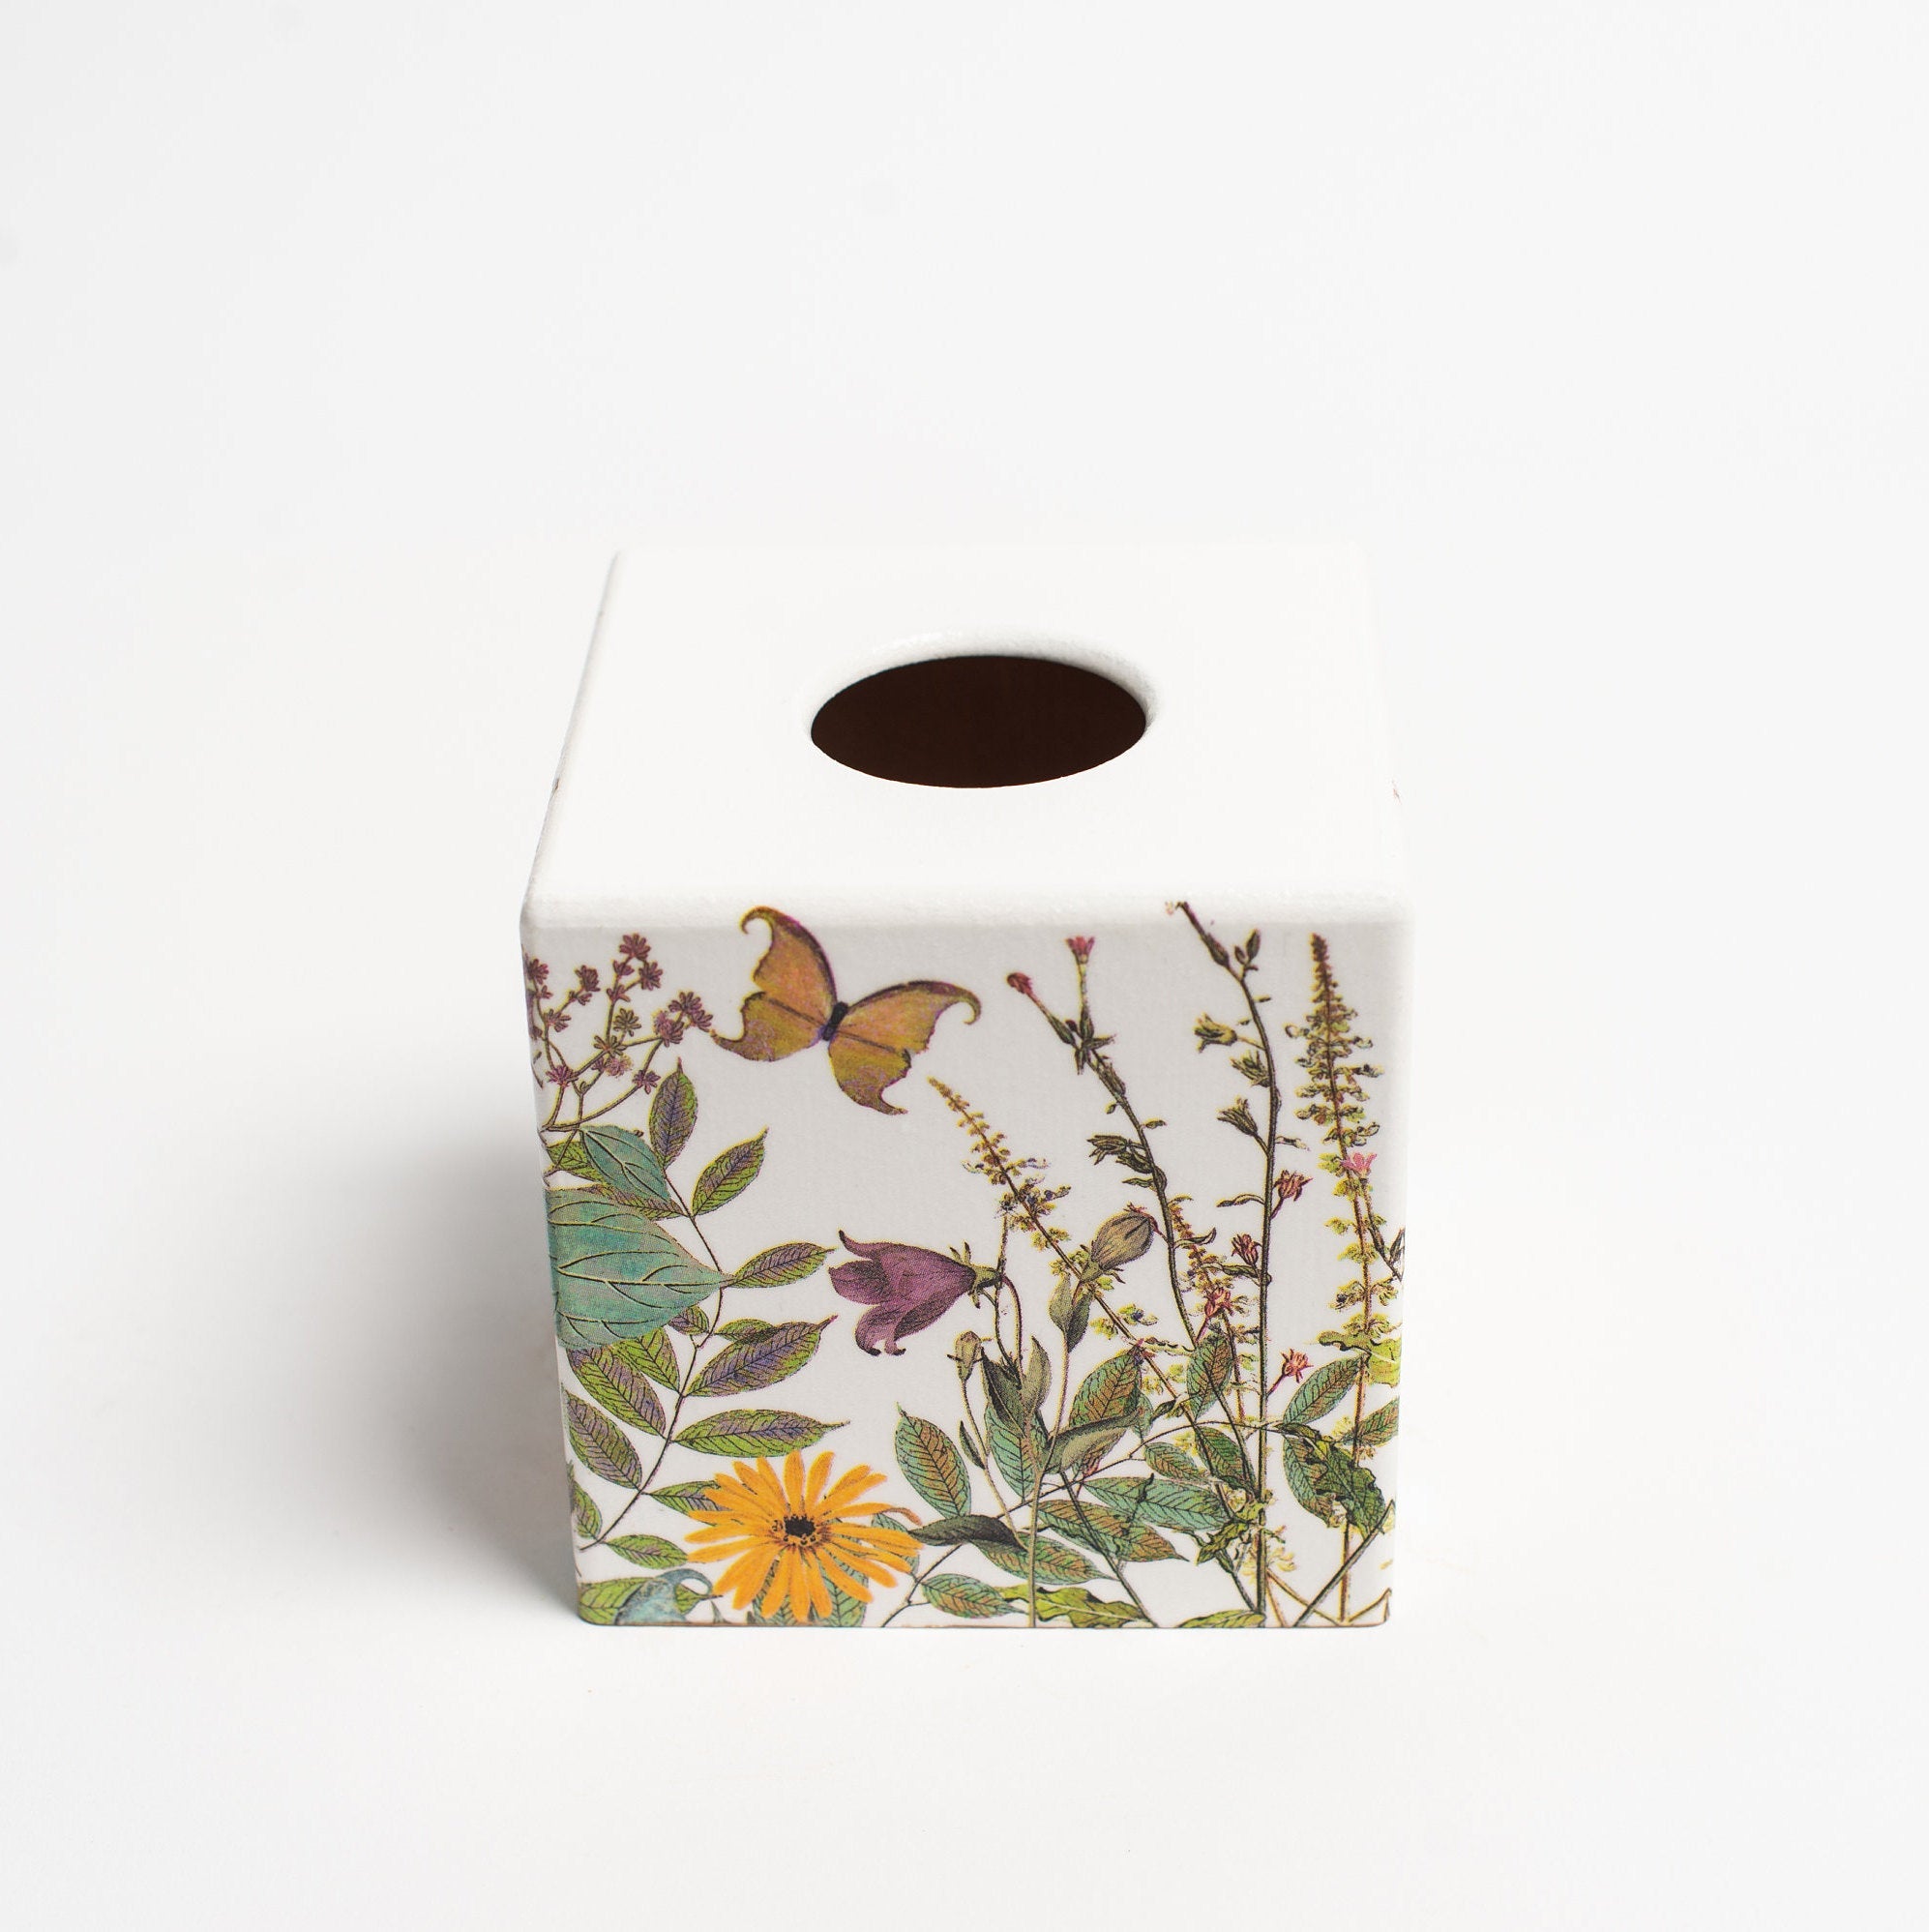 Meadow Butterflies Tissue Box Cover - Handmade